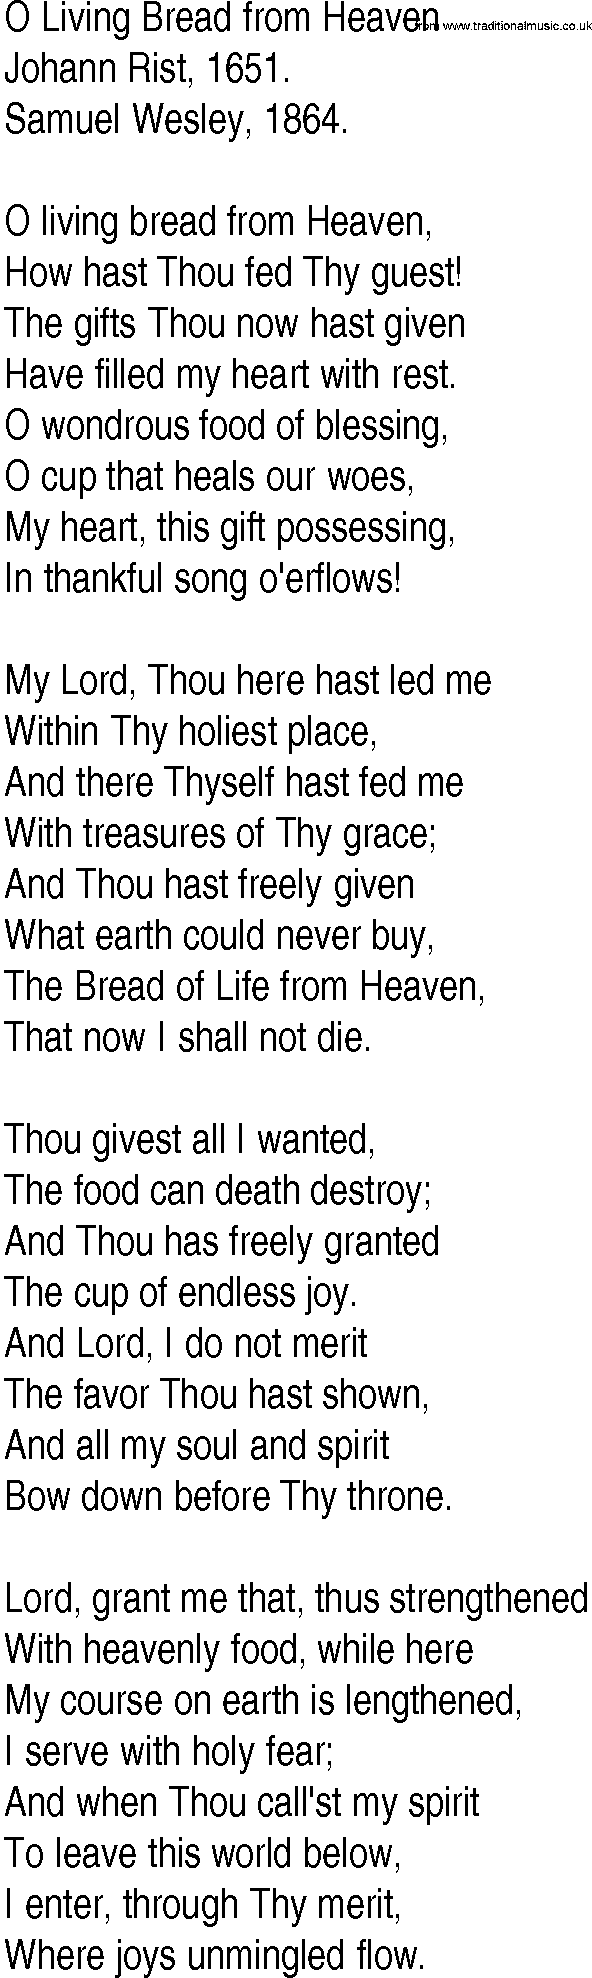 Hymn and Gospel Song: O Living Bread from Heaven by Johann Rist lyrics